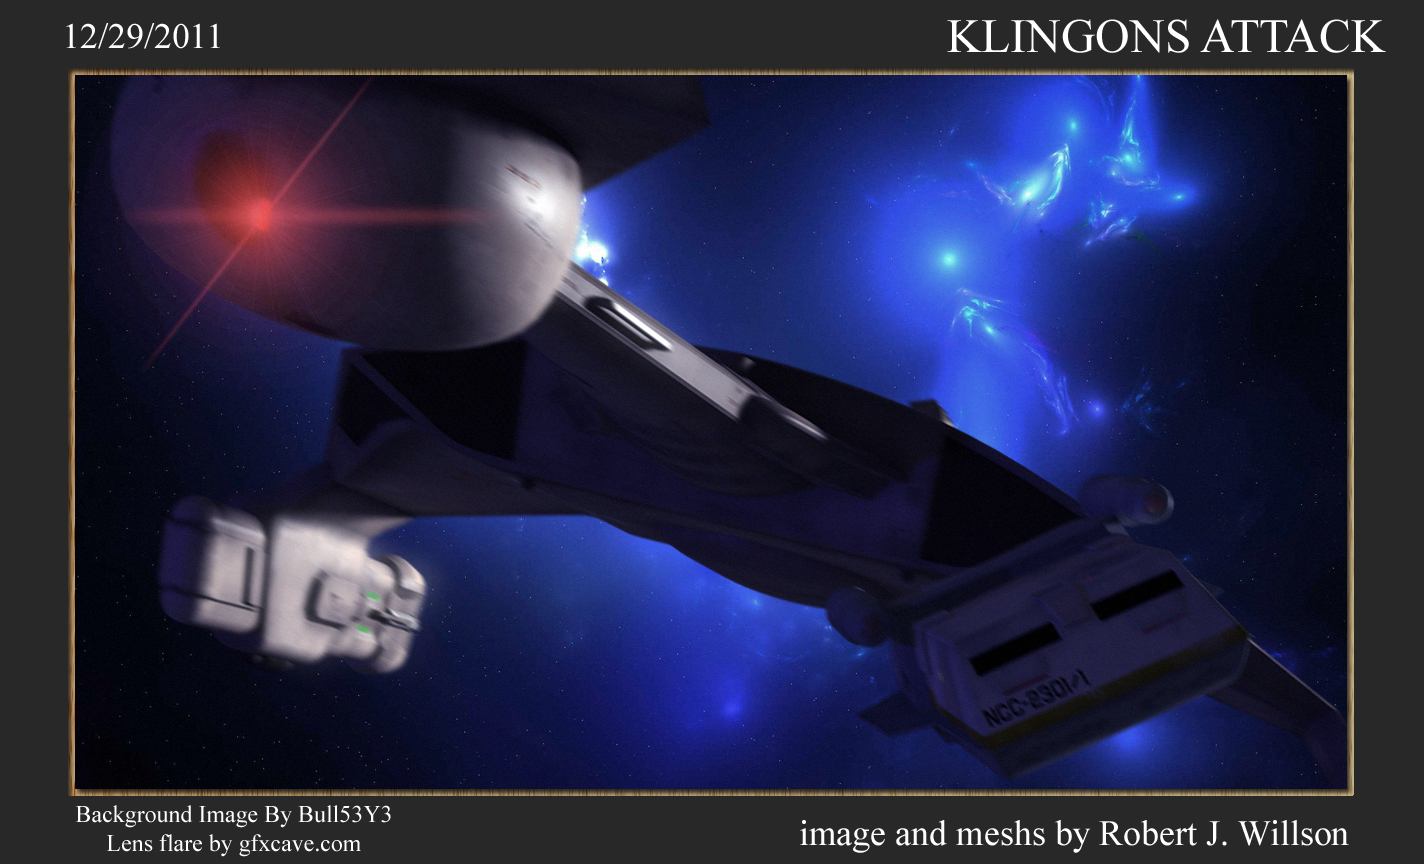 klingonsattckhirez.jpg